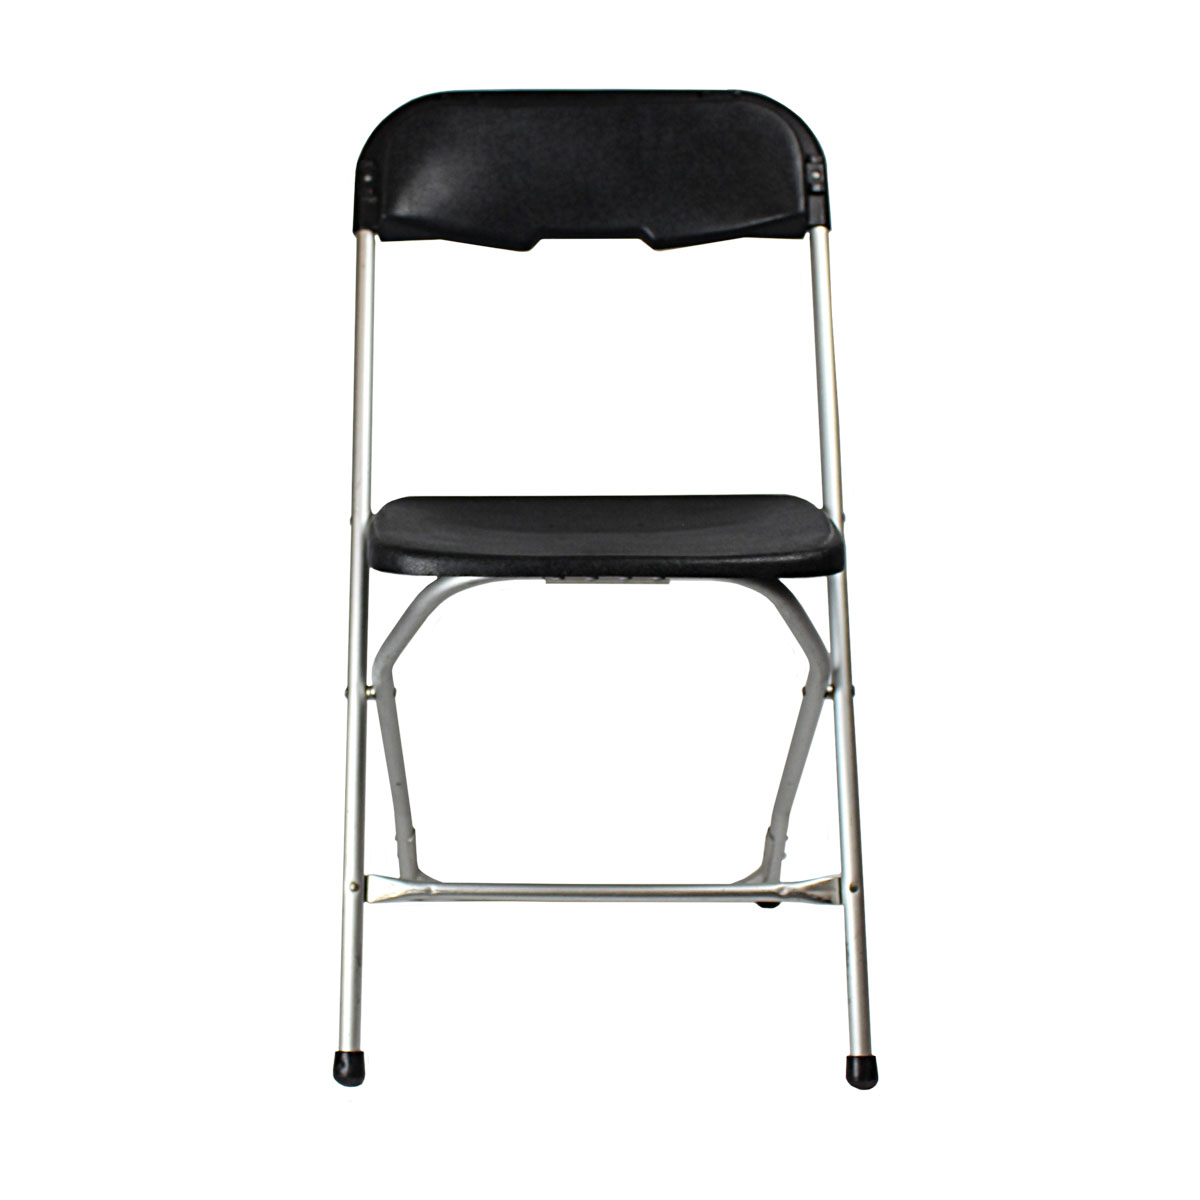 Chair Black Plastic Folding